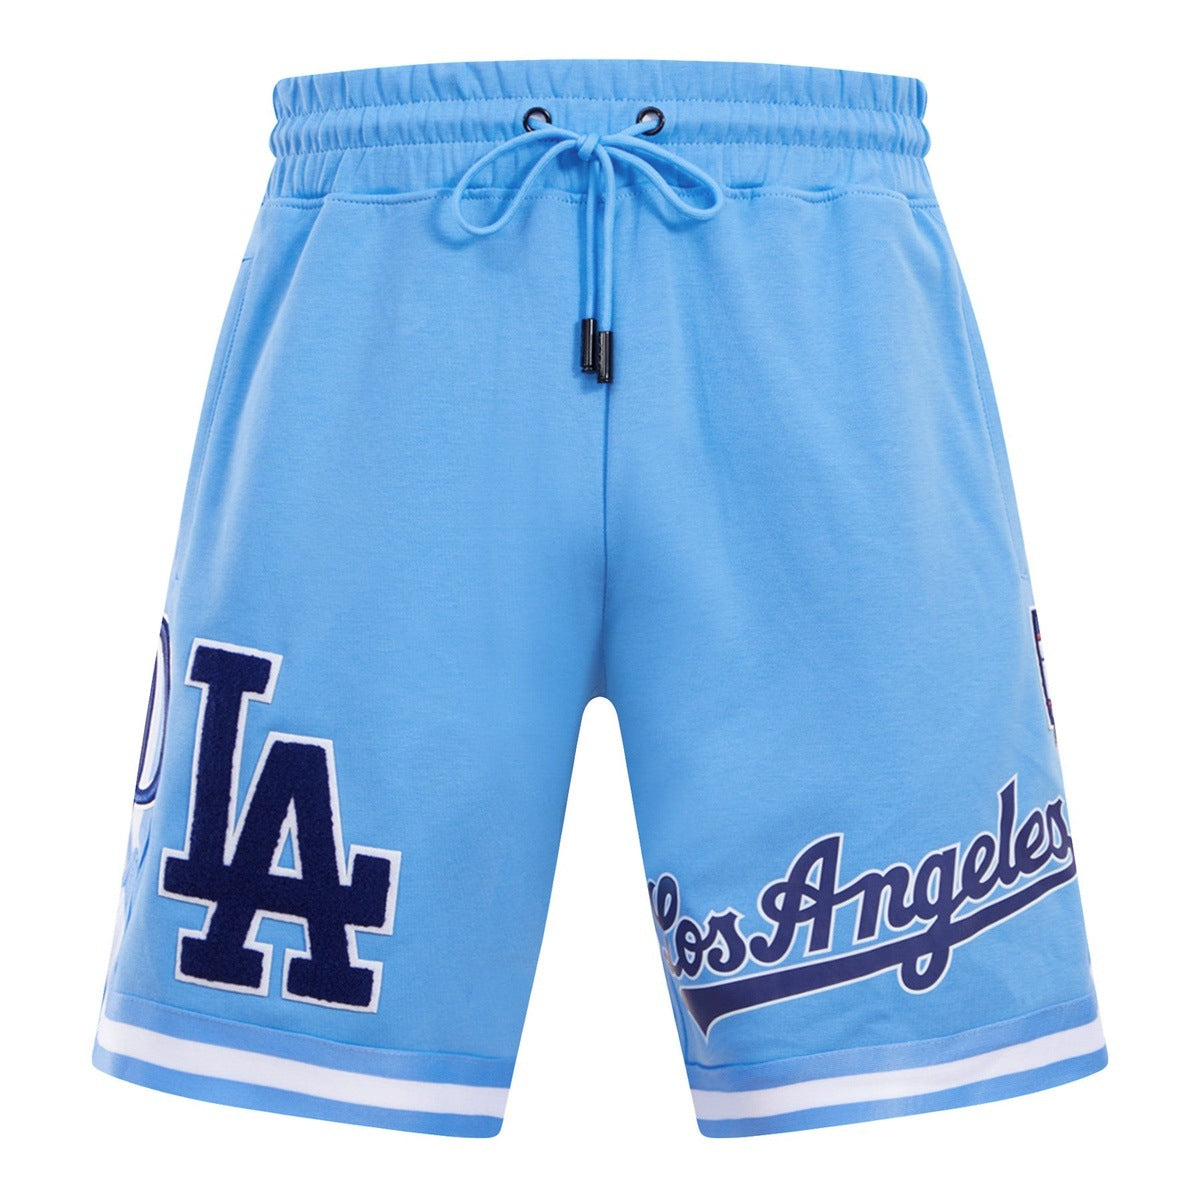 Pro Standard Dodgers Chrome Woven Shorts - Men's